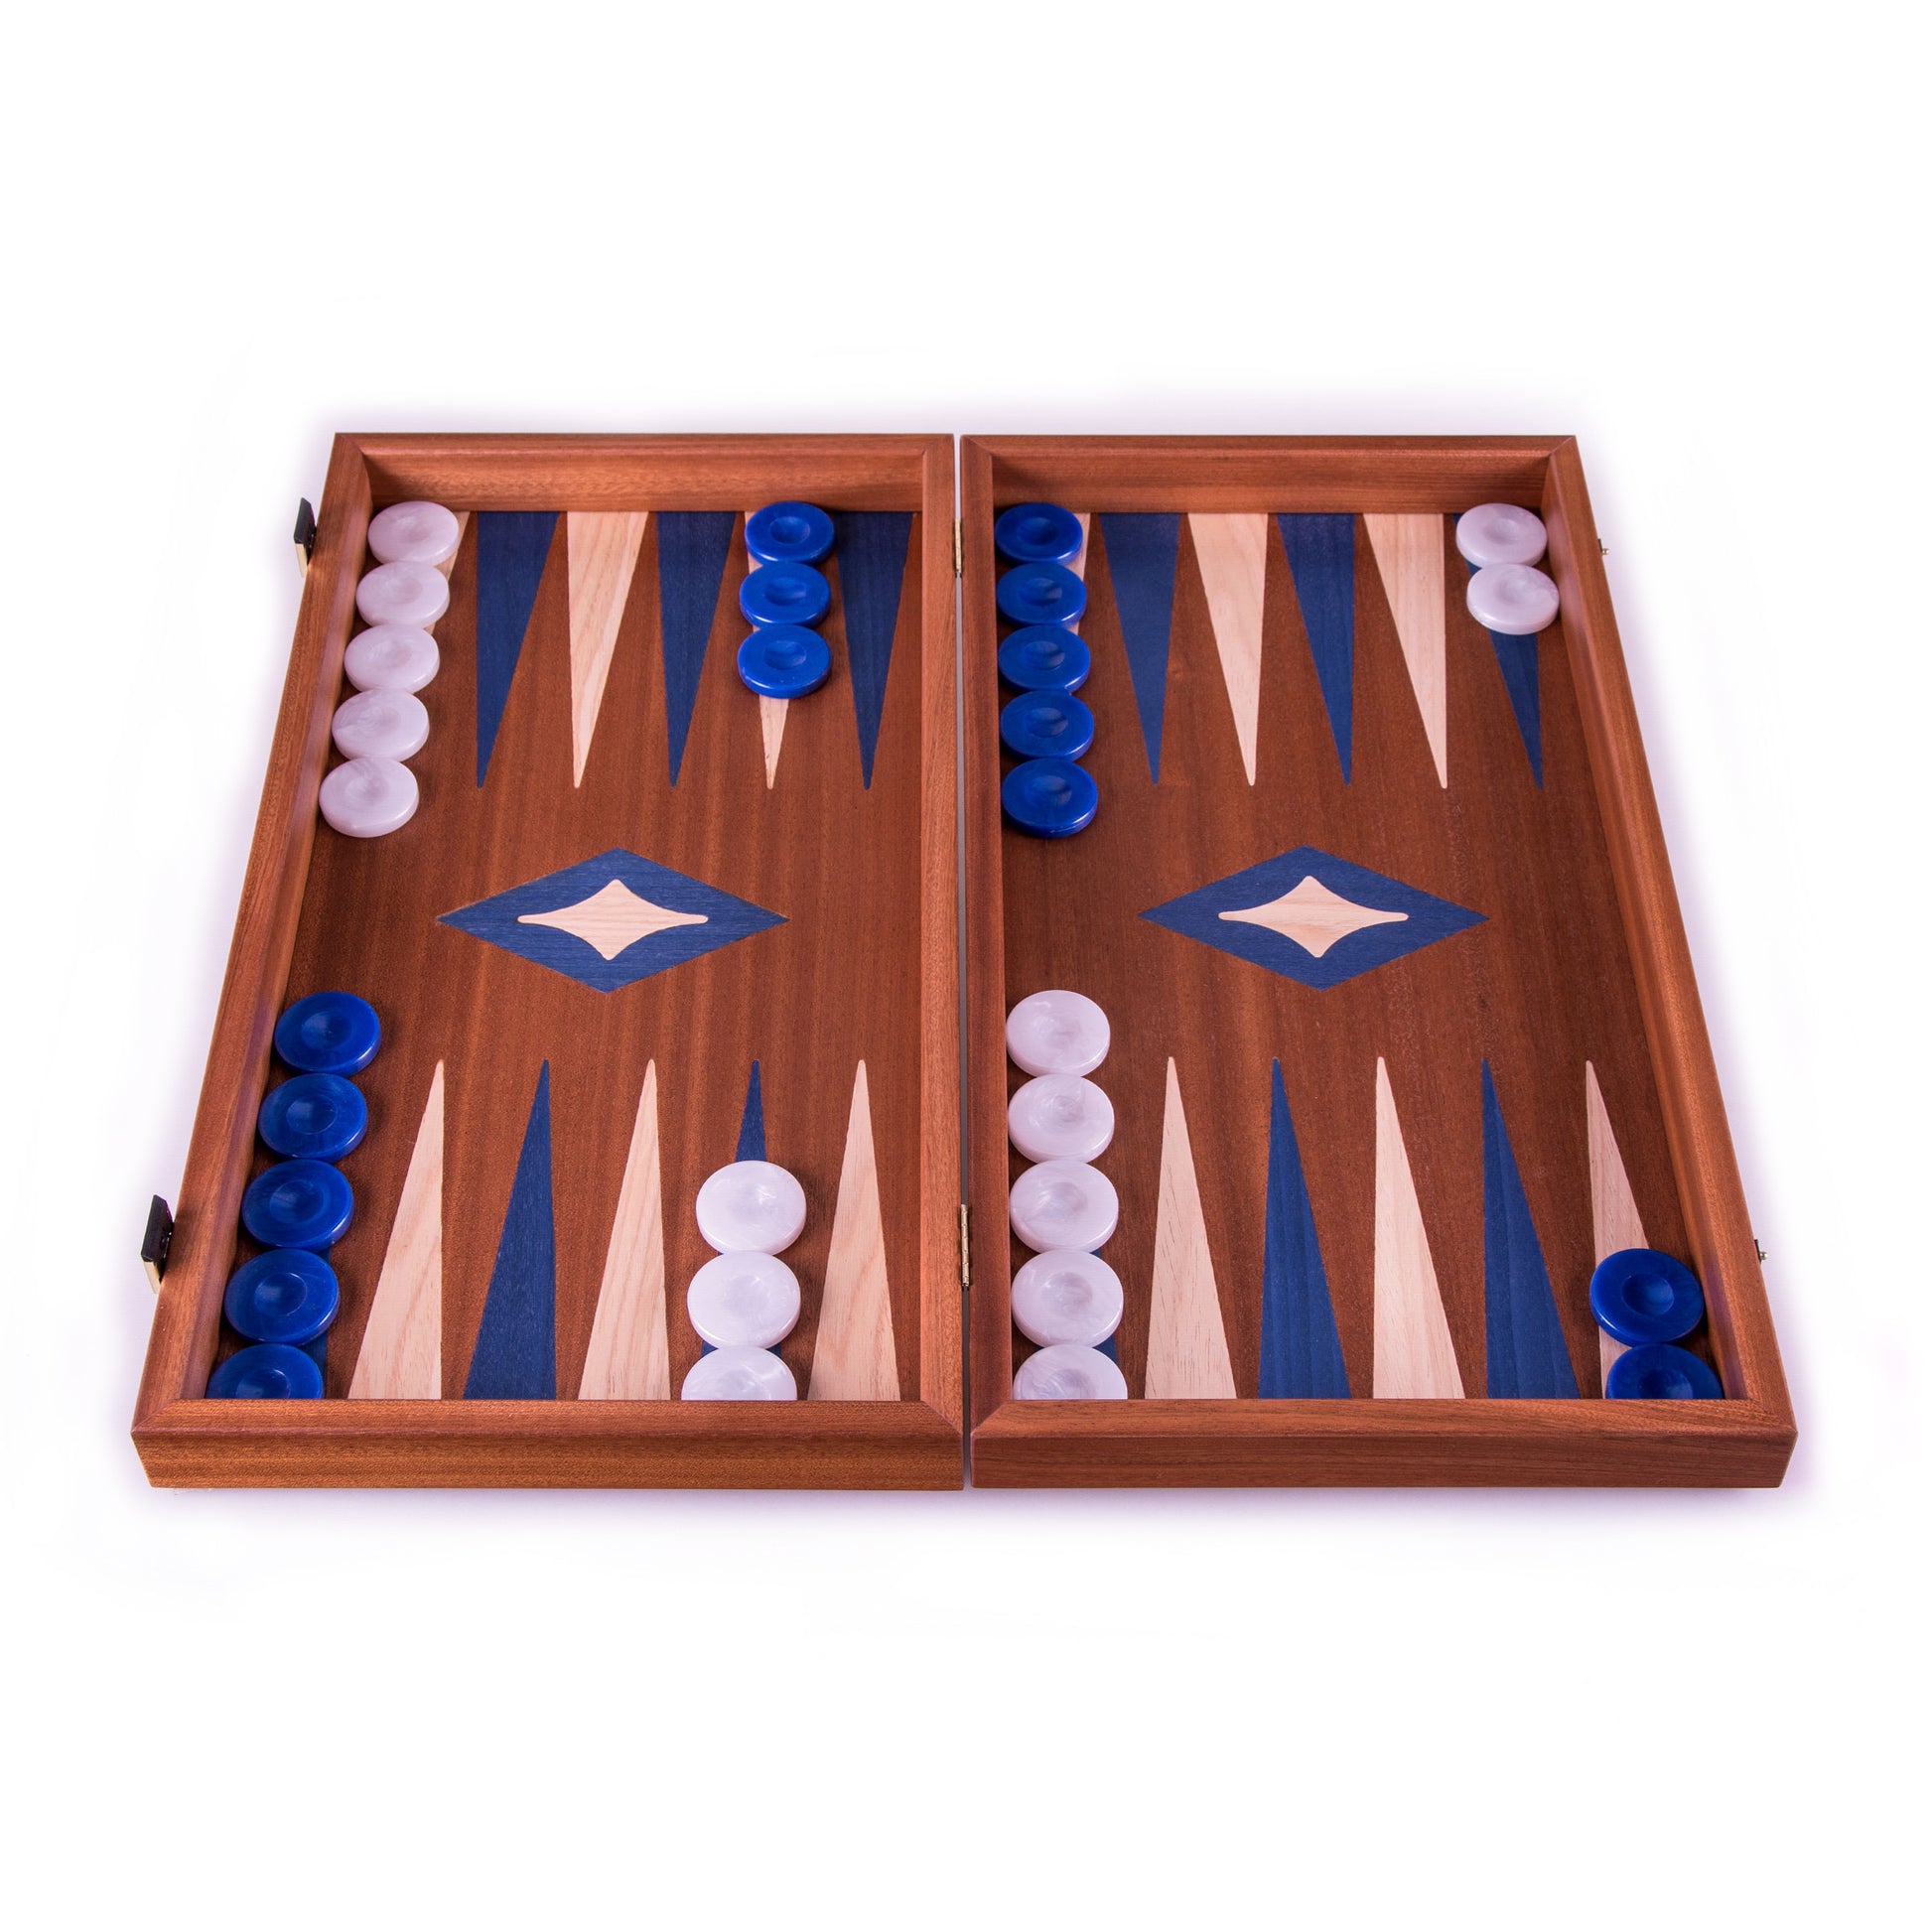 MAHOGANY Chess & Backgammon Board in blue color - Premium Backgammon from MANOPOULOS Chess & Backgammon - Just €79.50! Shop now at MANOPOULOS Chess & Backgammon